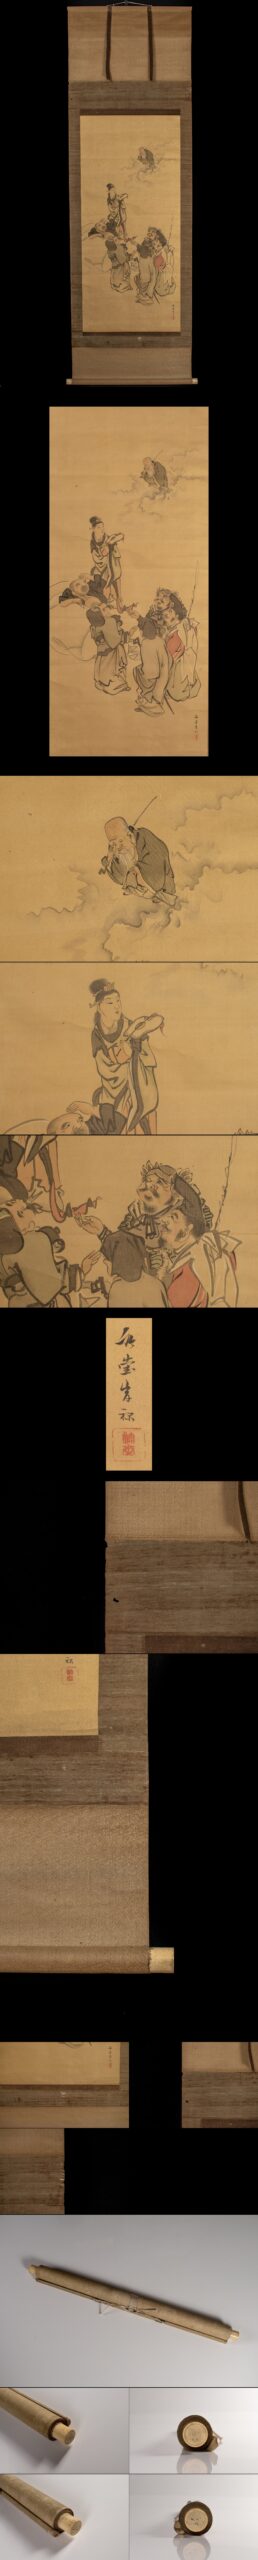 Lovely Japanese 18th/19th c Edo or Meiji Scroll Painting Seven Lucky Gods